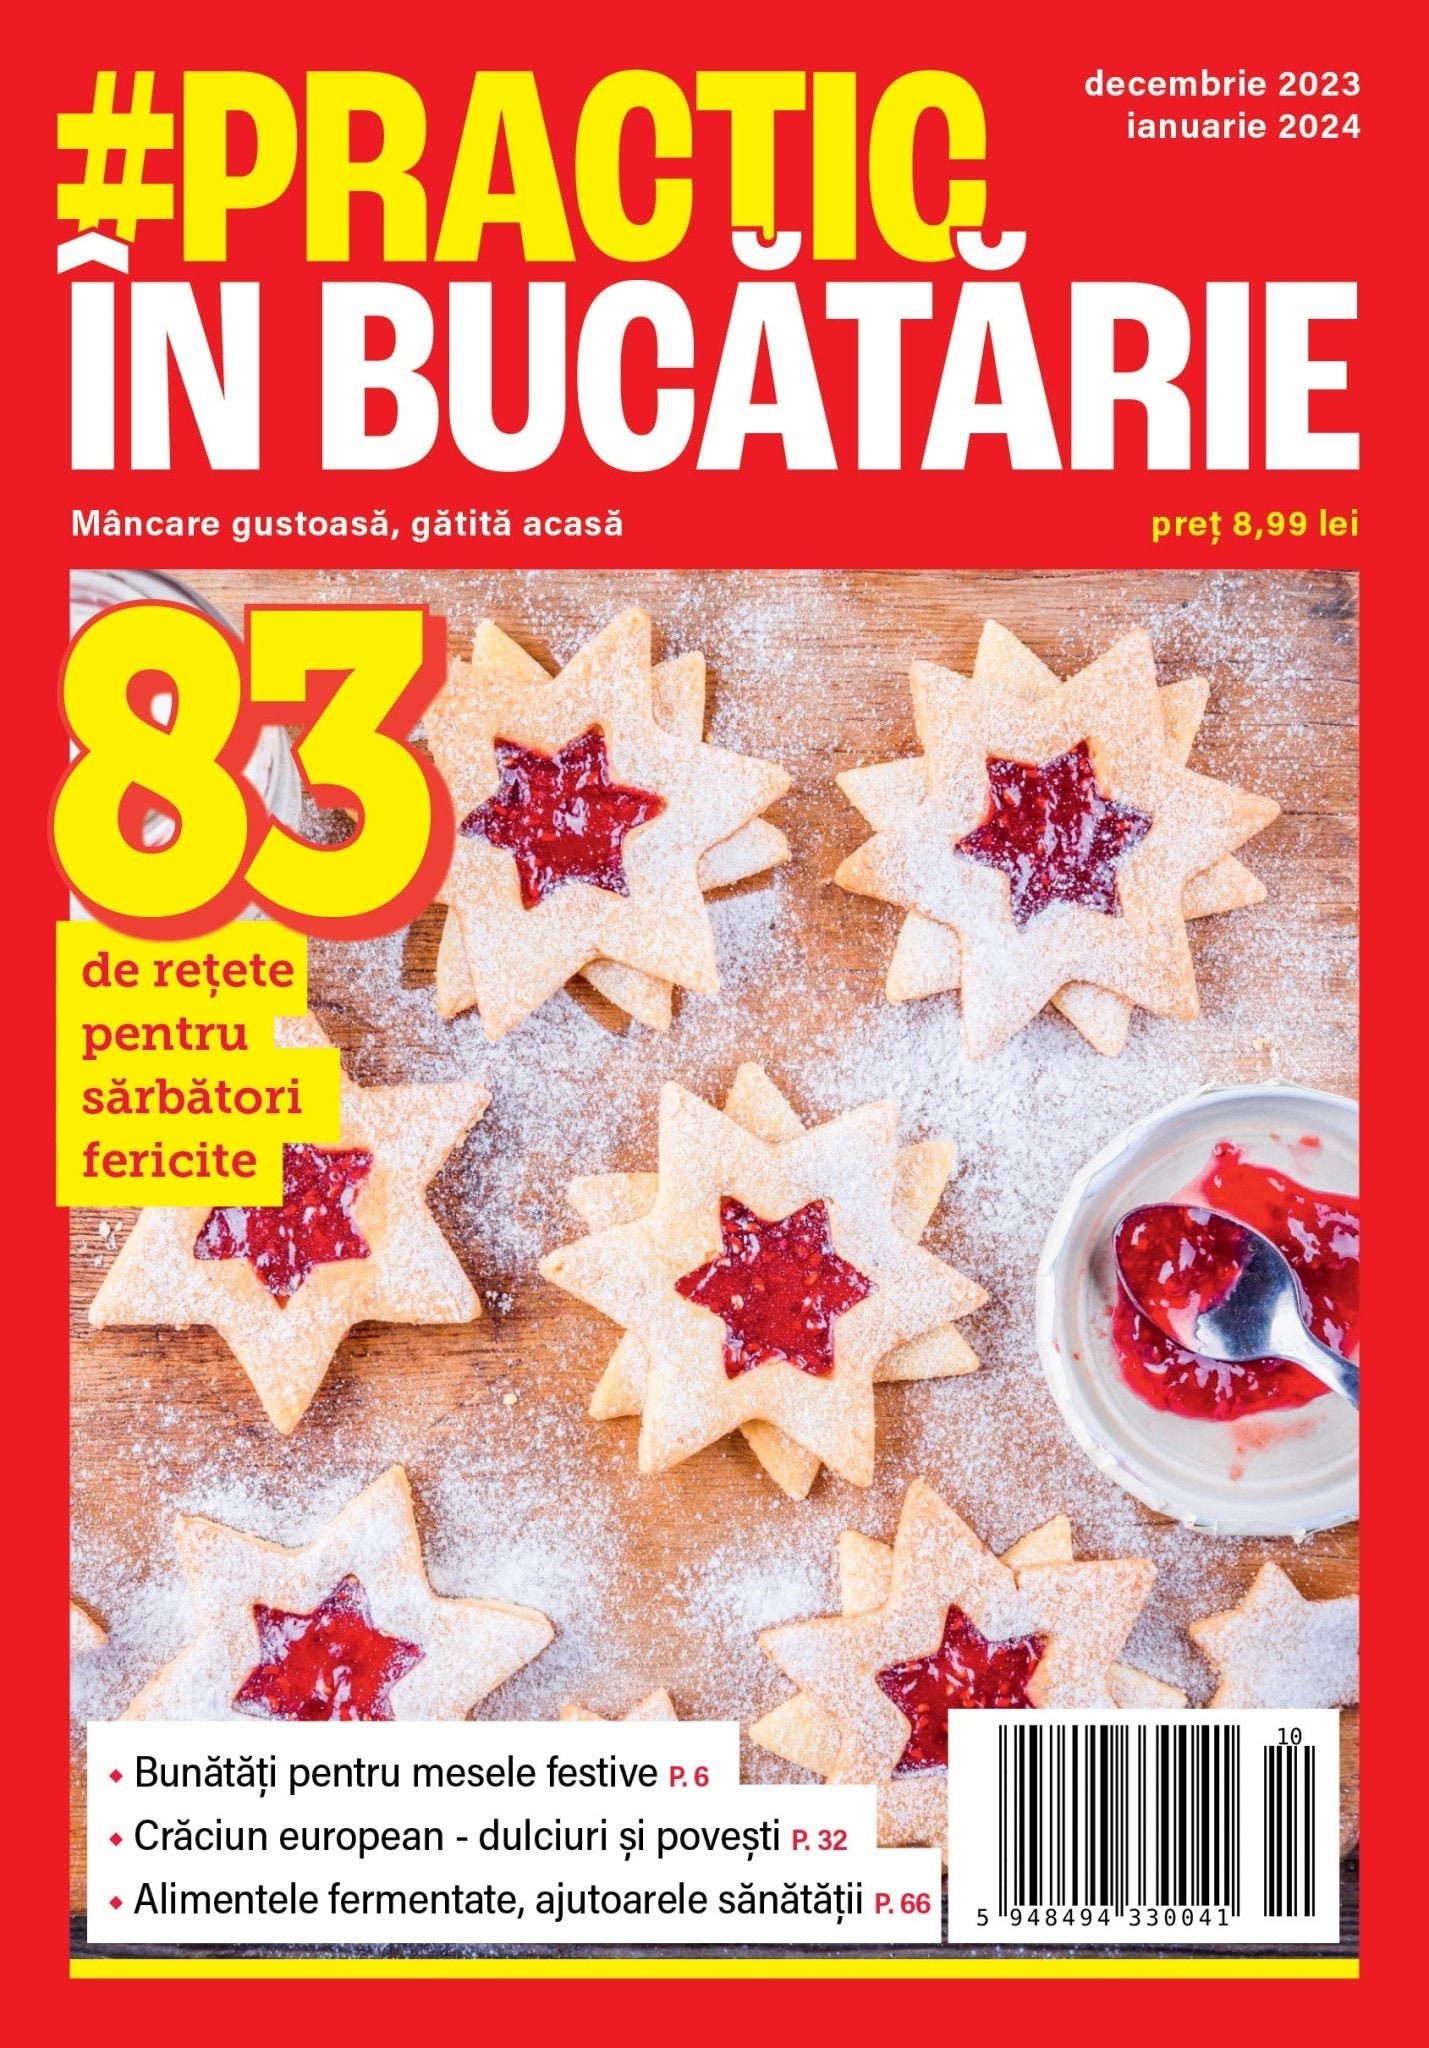 #Practic in bucatarie decembrie 2023 - Publisol.ro